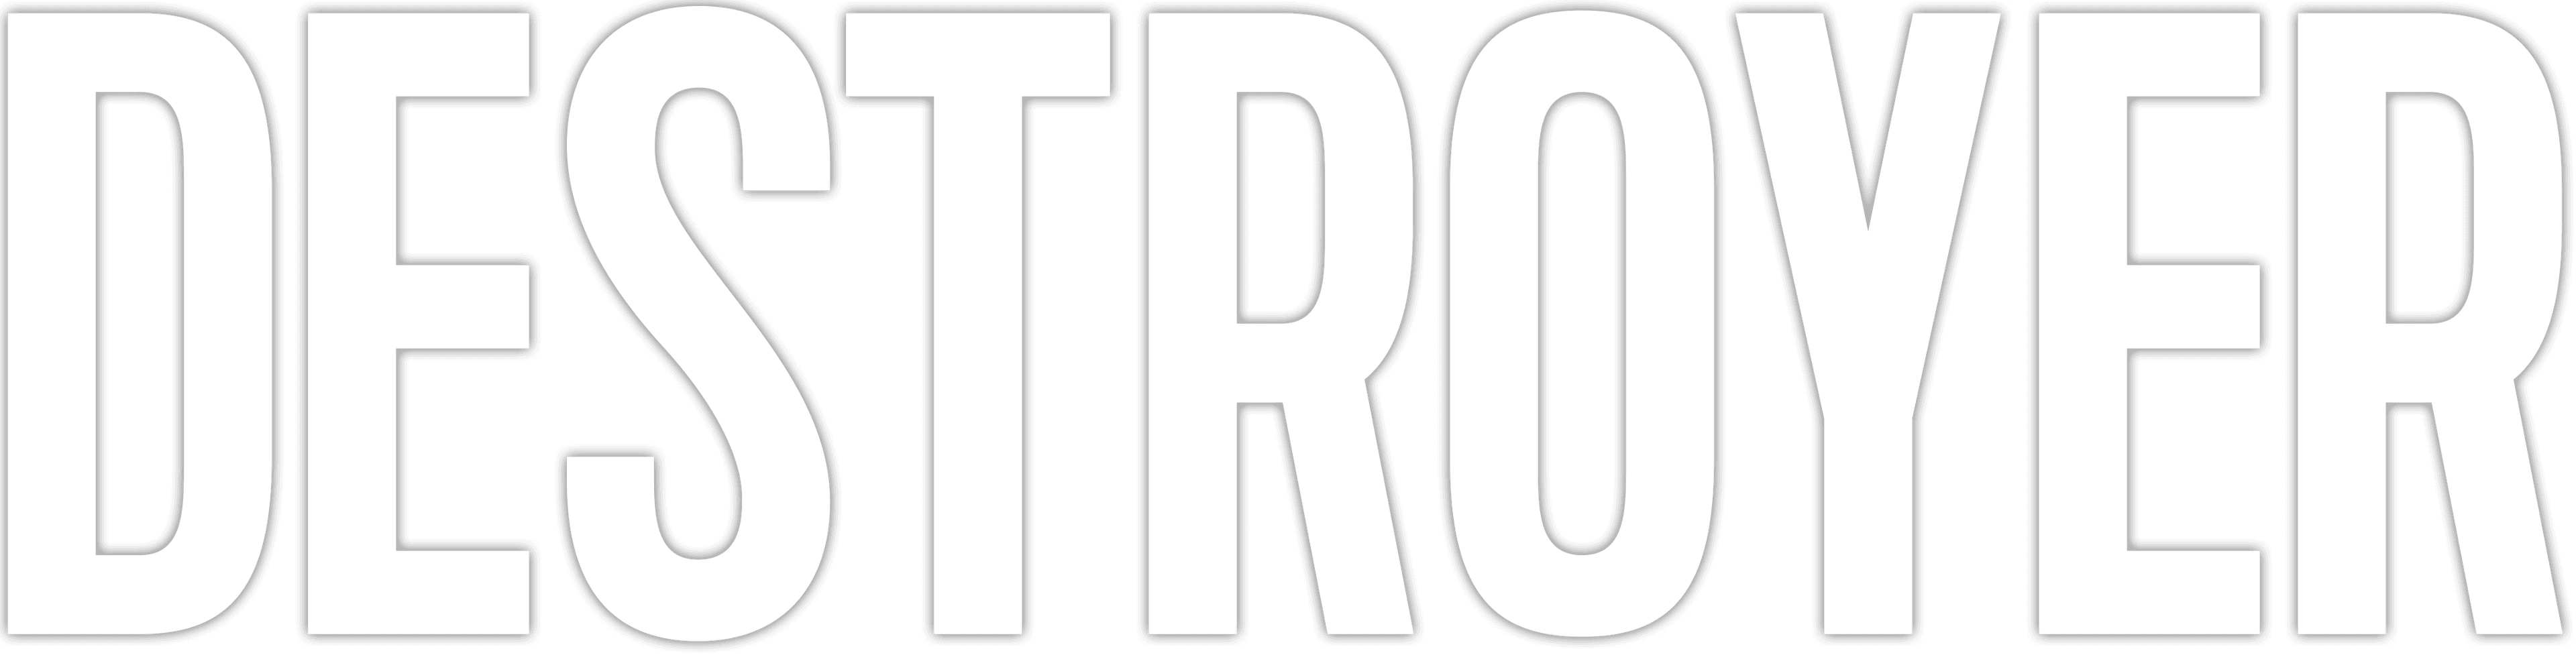 Destroyer logo